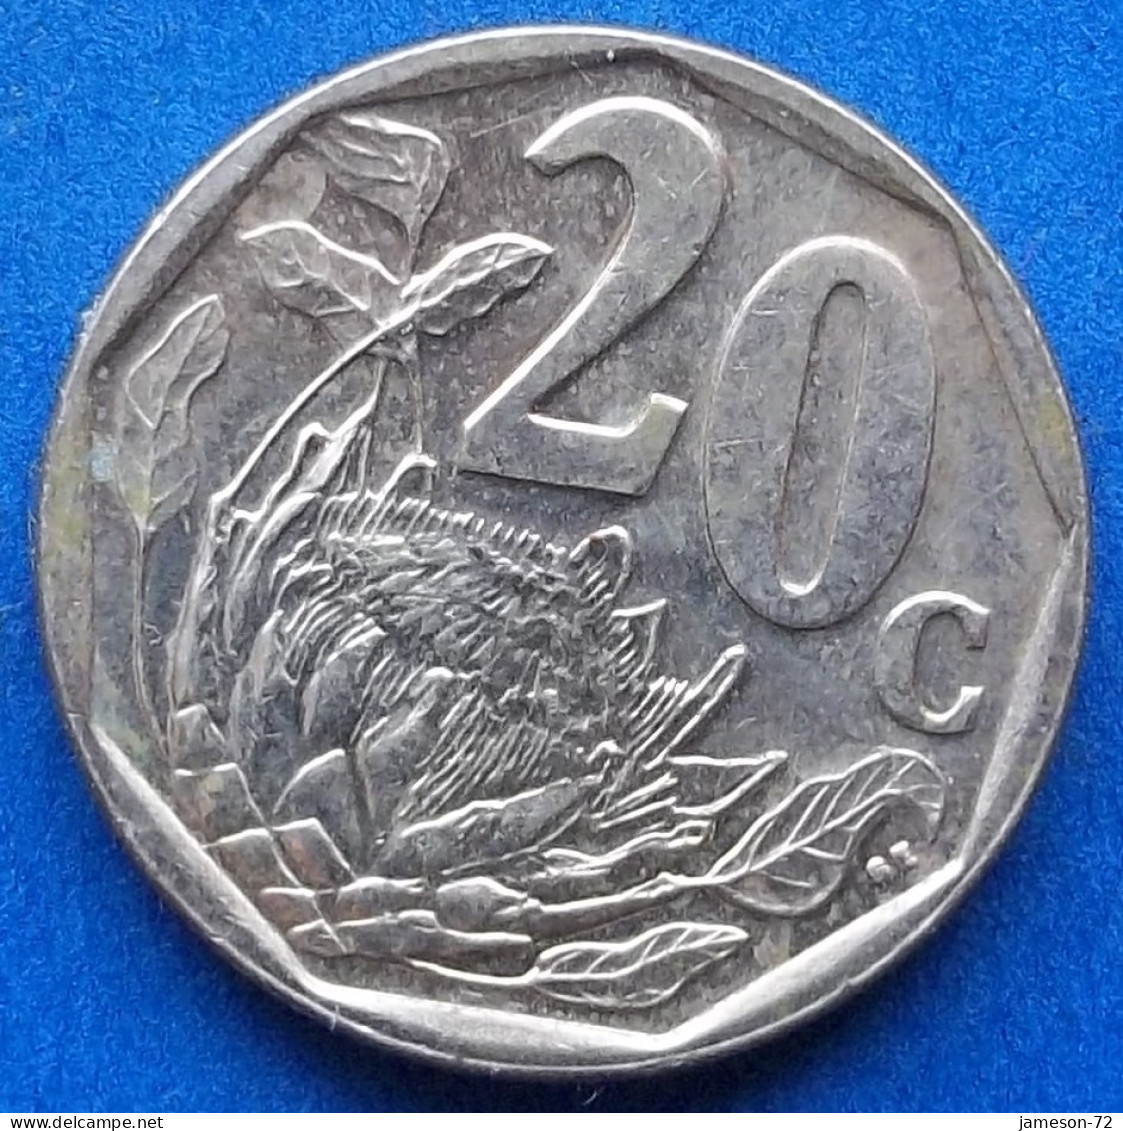 SOUTH AFRICA - 20 Cents 2021 "Protea Flower" KM# 442 Republic (1961) - Edelweiss Coins - Zuid-Afrika